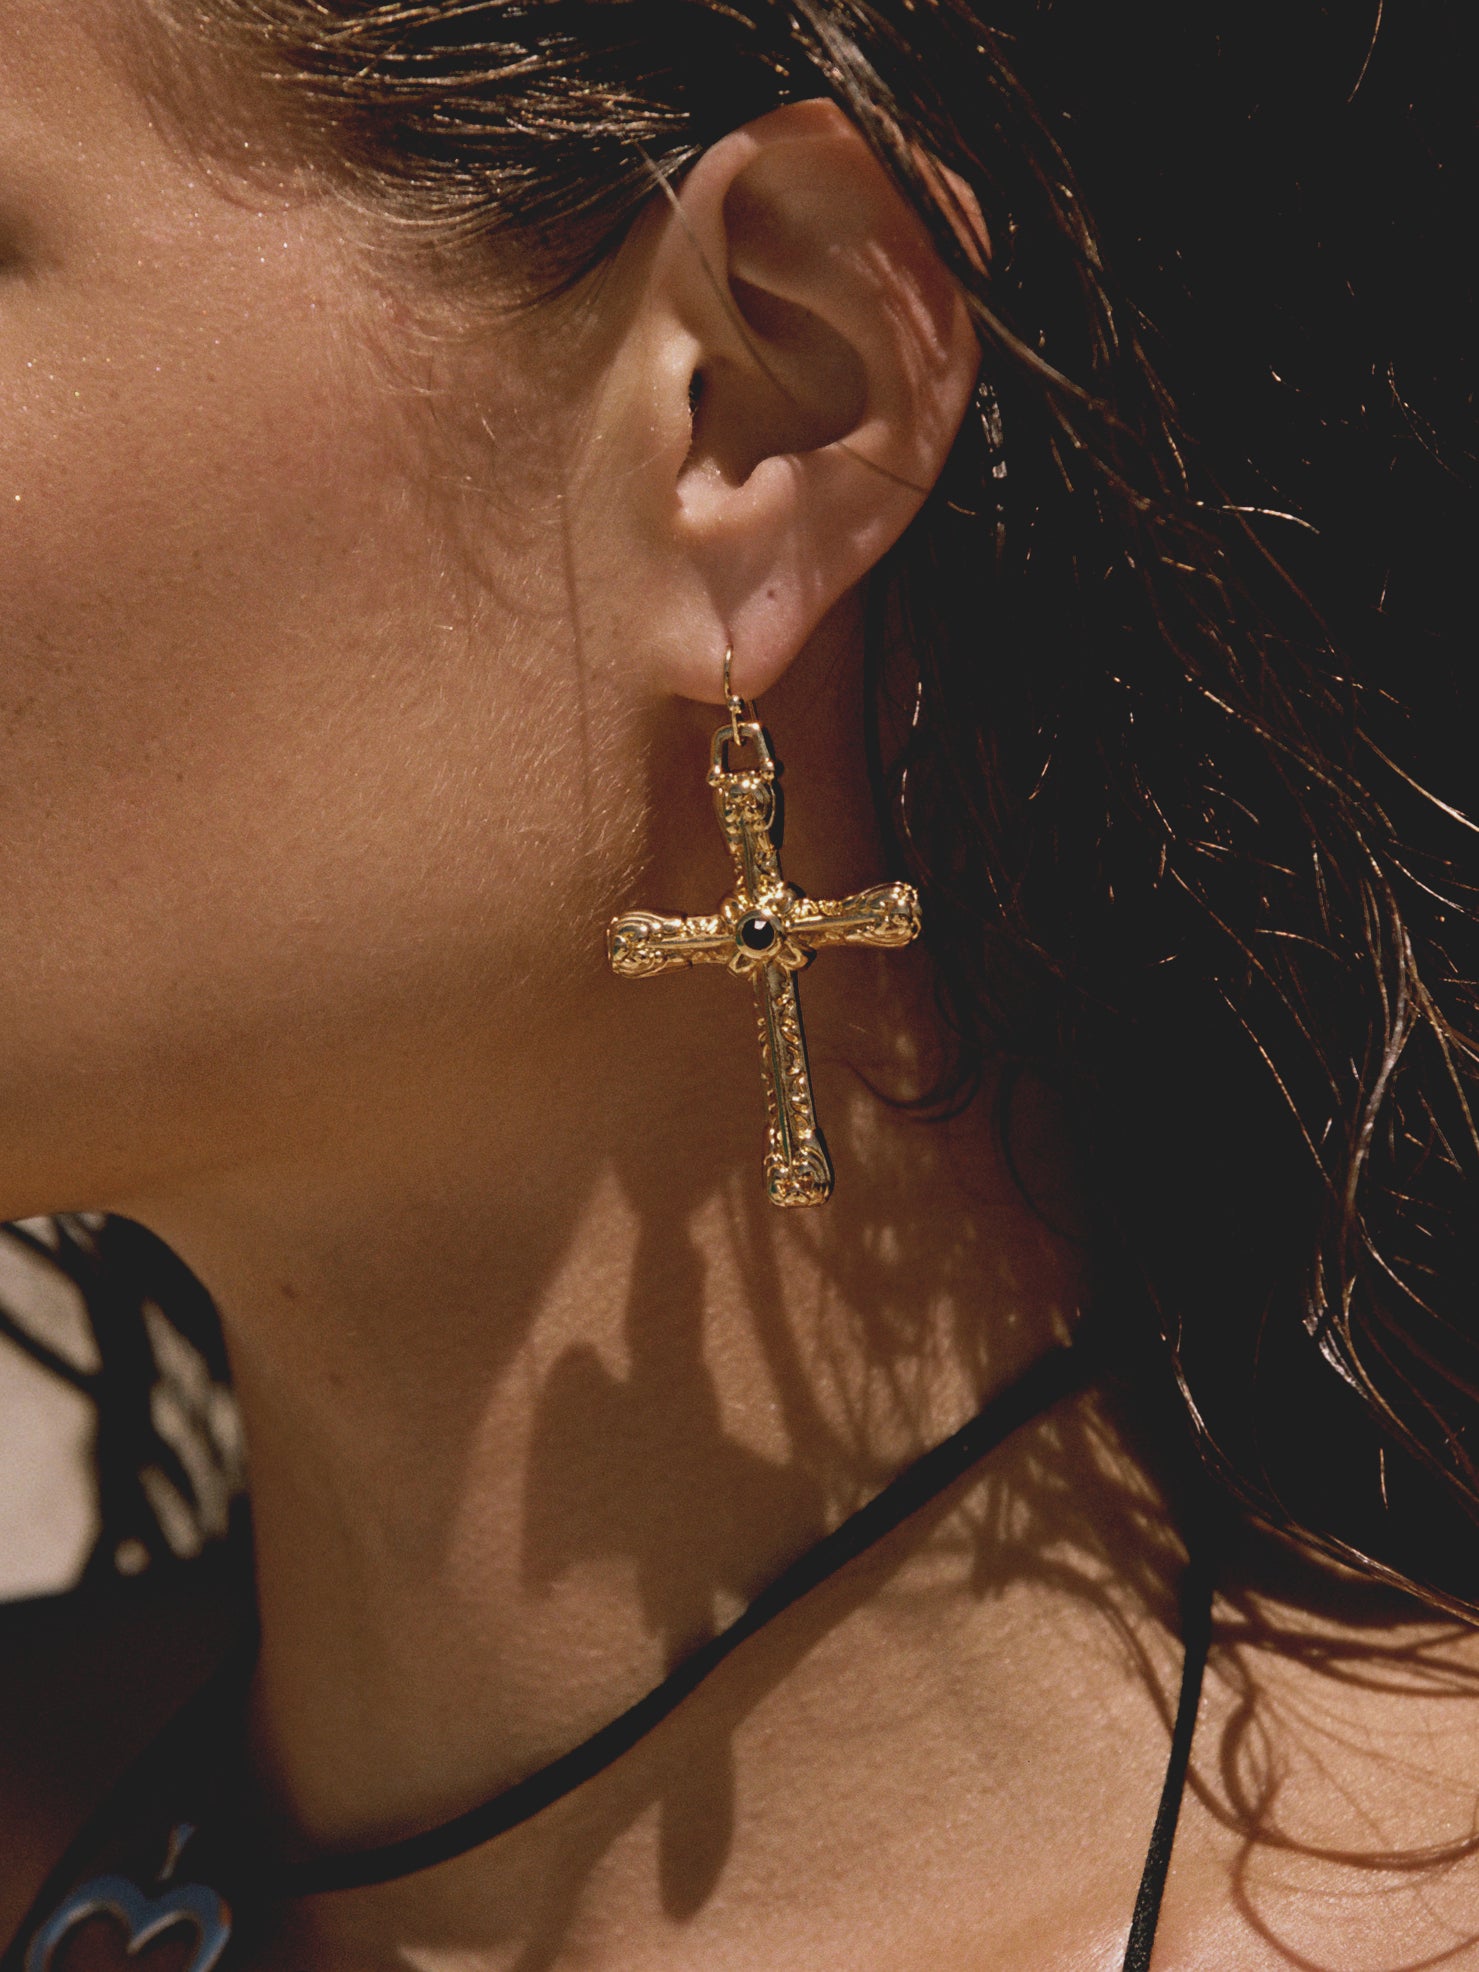 The Nova Cross Earrings